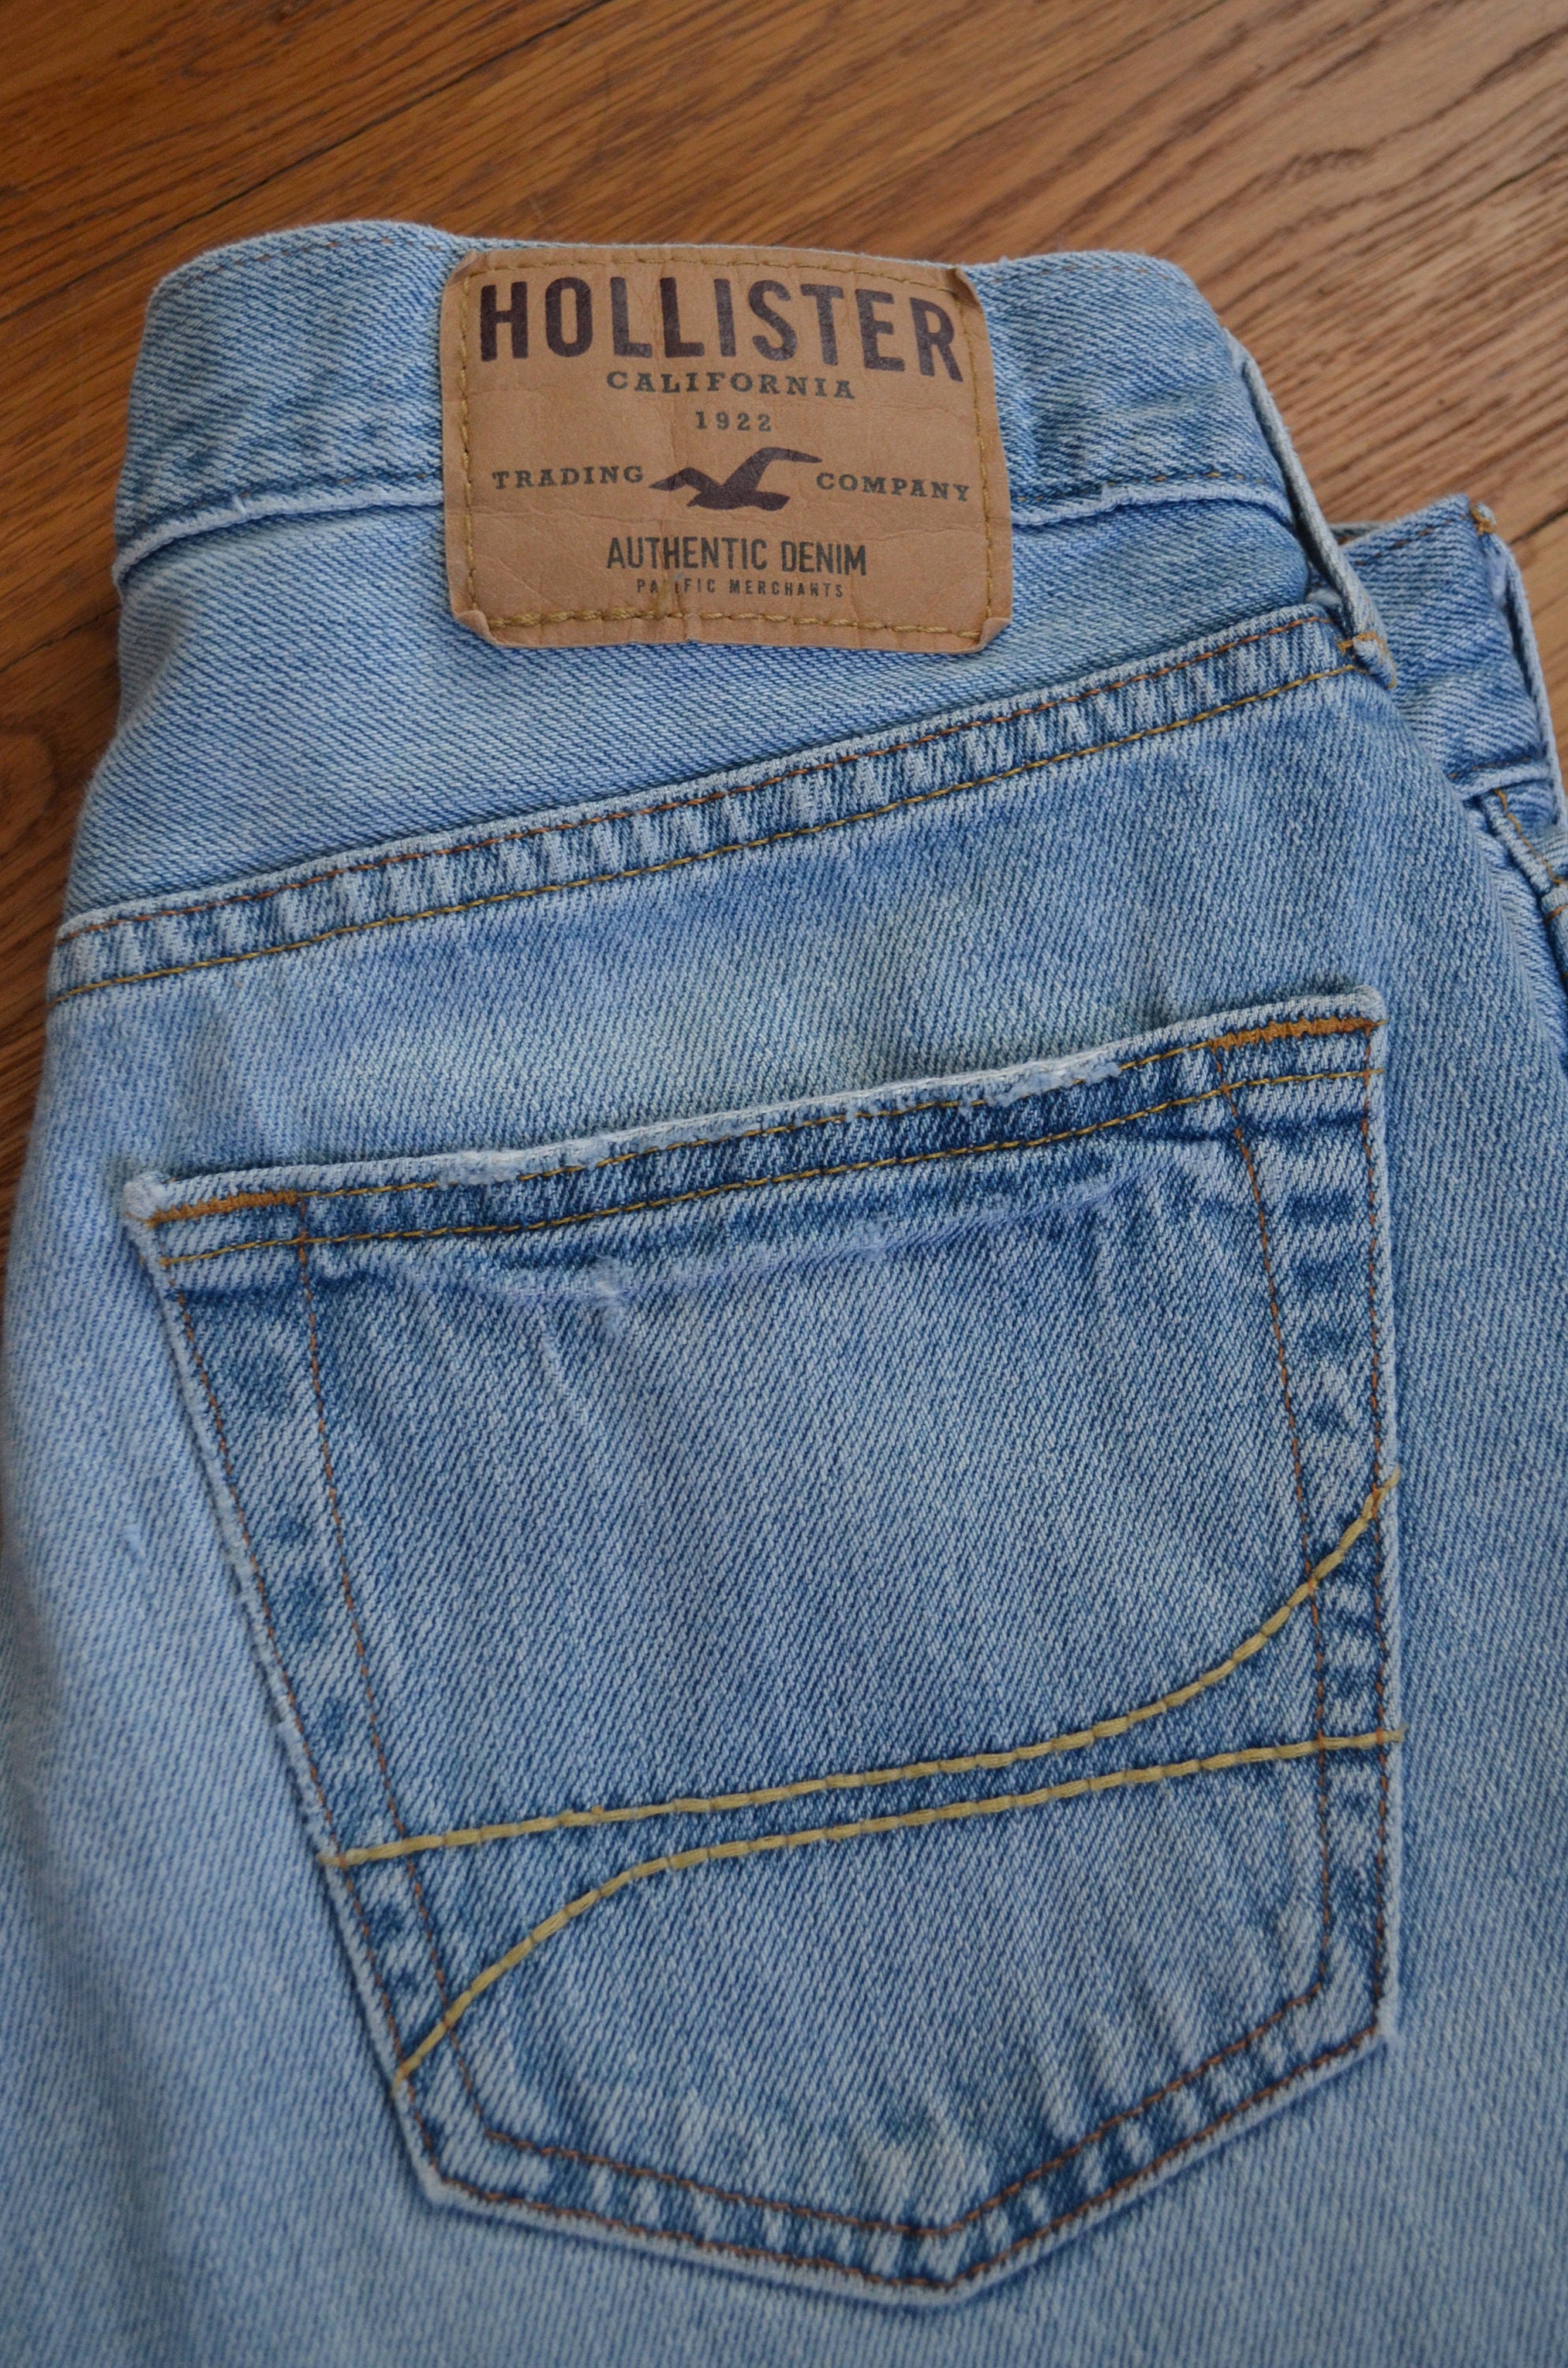 Vintage HOLLISTER California 1922 AUTHENTIC DENIM Slim Straight Button Fly  Jeans Size 30wx30l 30X30 Women's Womens 